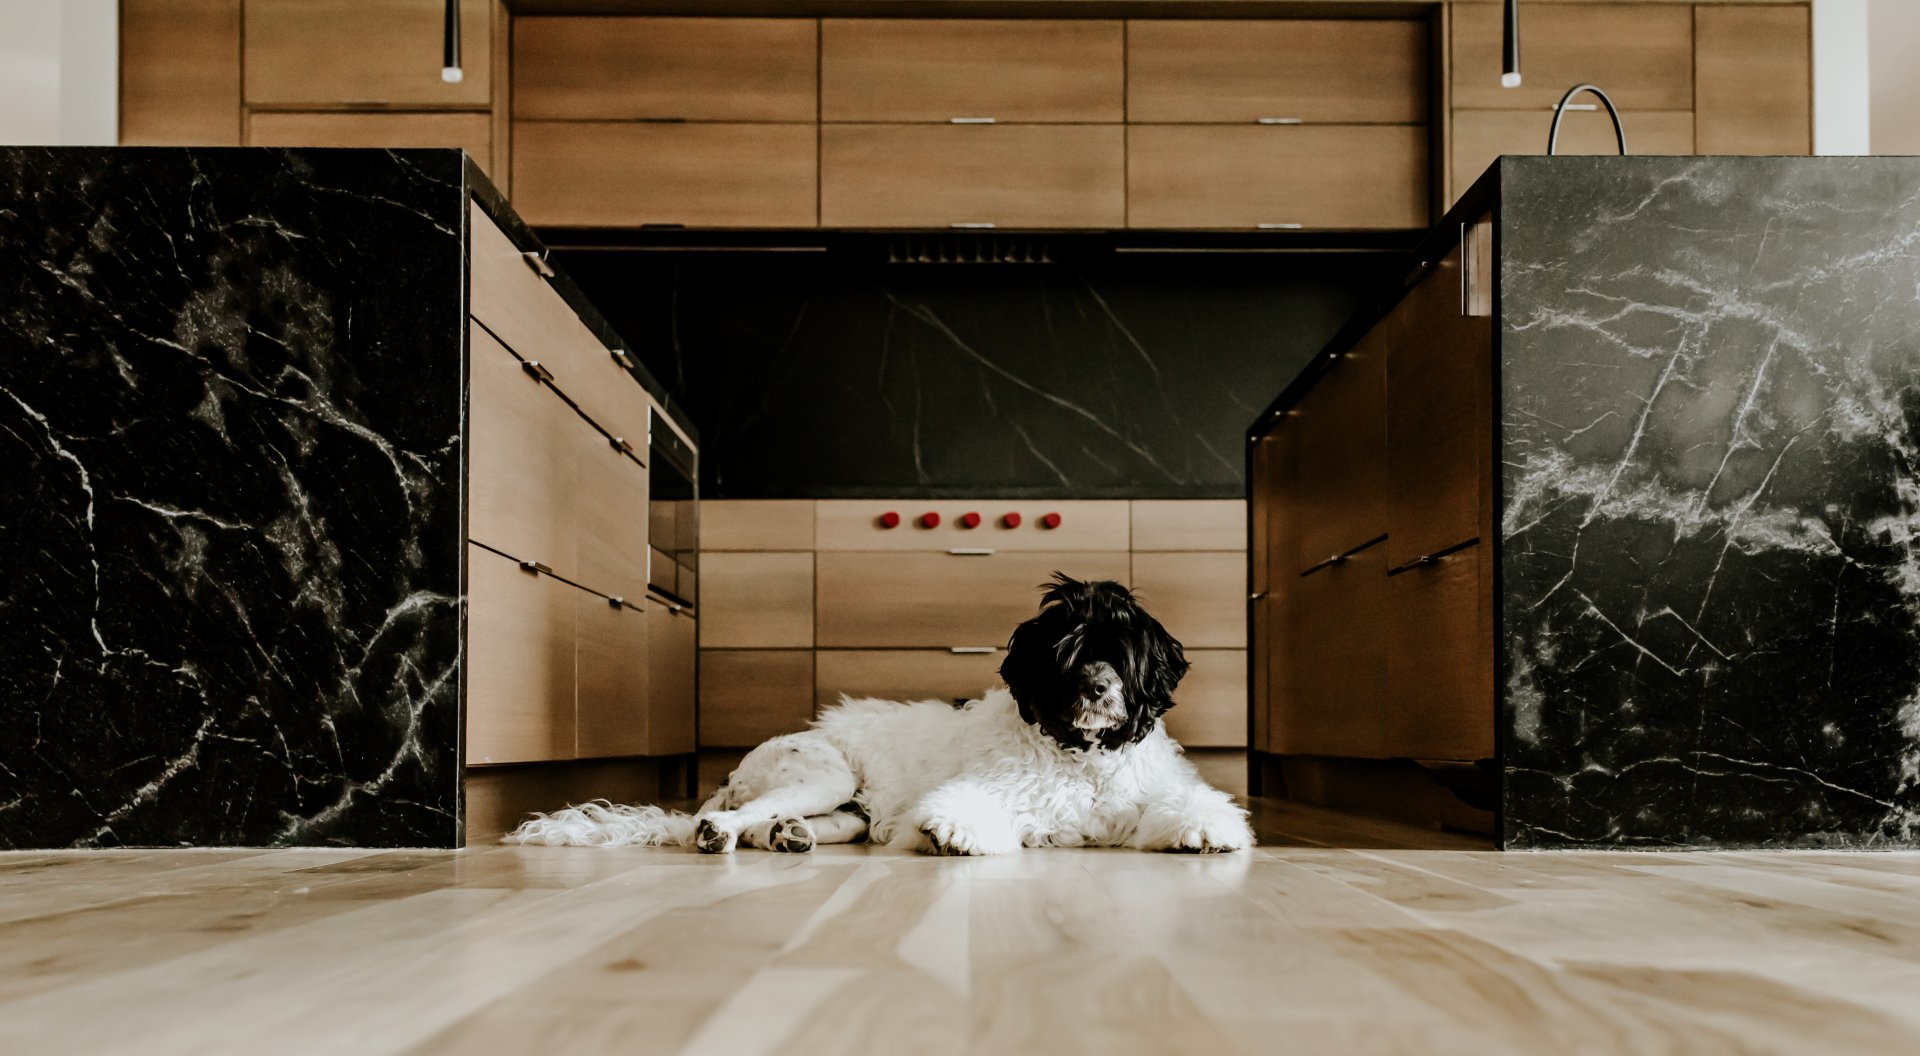 Dog sitting on floor of kitchen